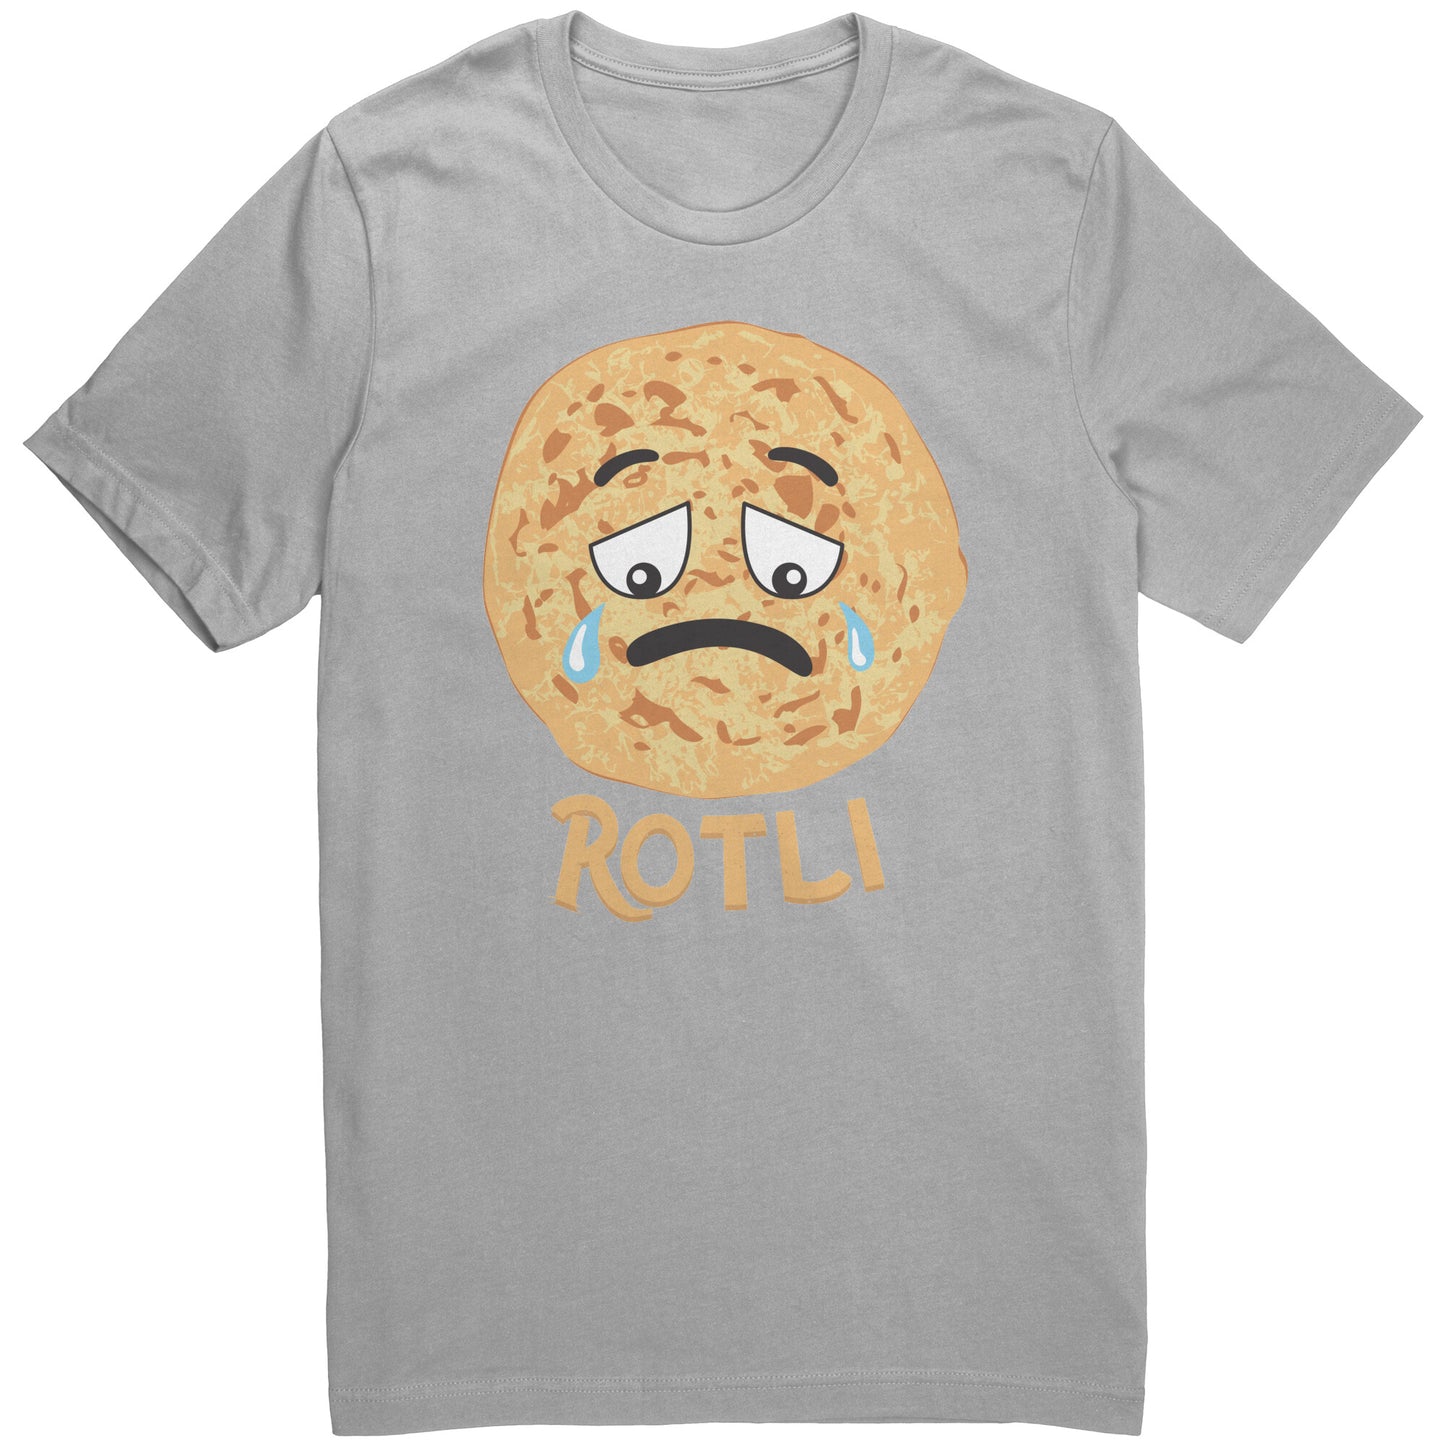 Rotli Shirts (Tank/Short/Long Sleeve Options)